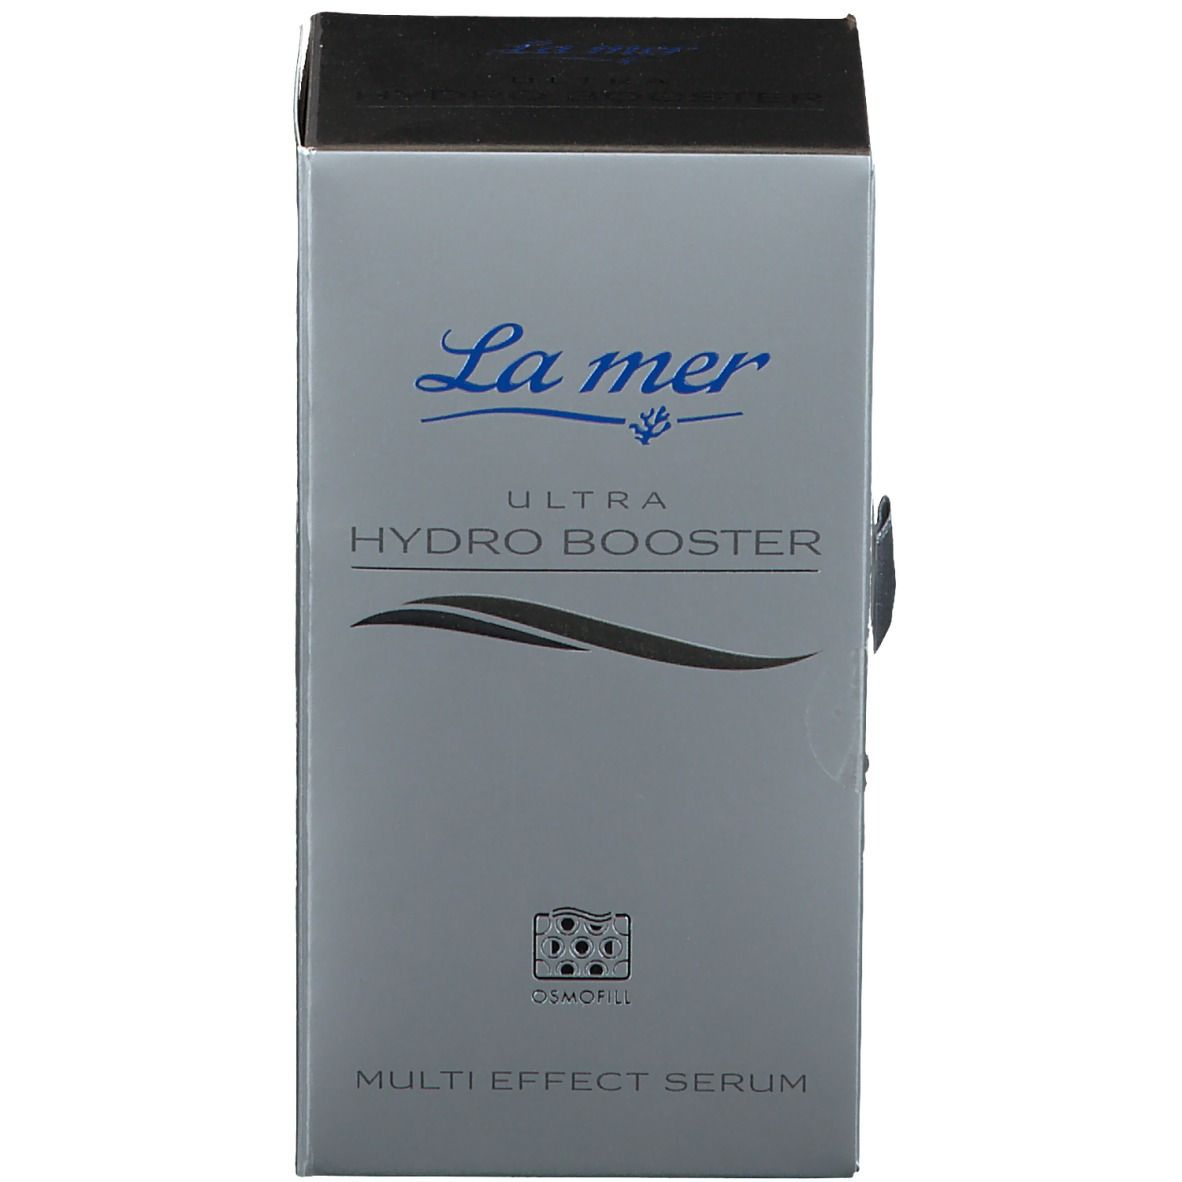 La mer Ultra Hydro Booster Multi Effect Serum mit Parfum